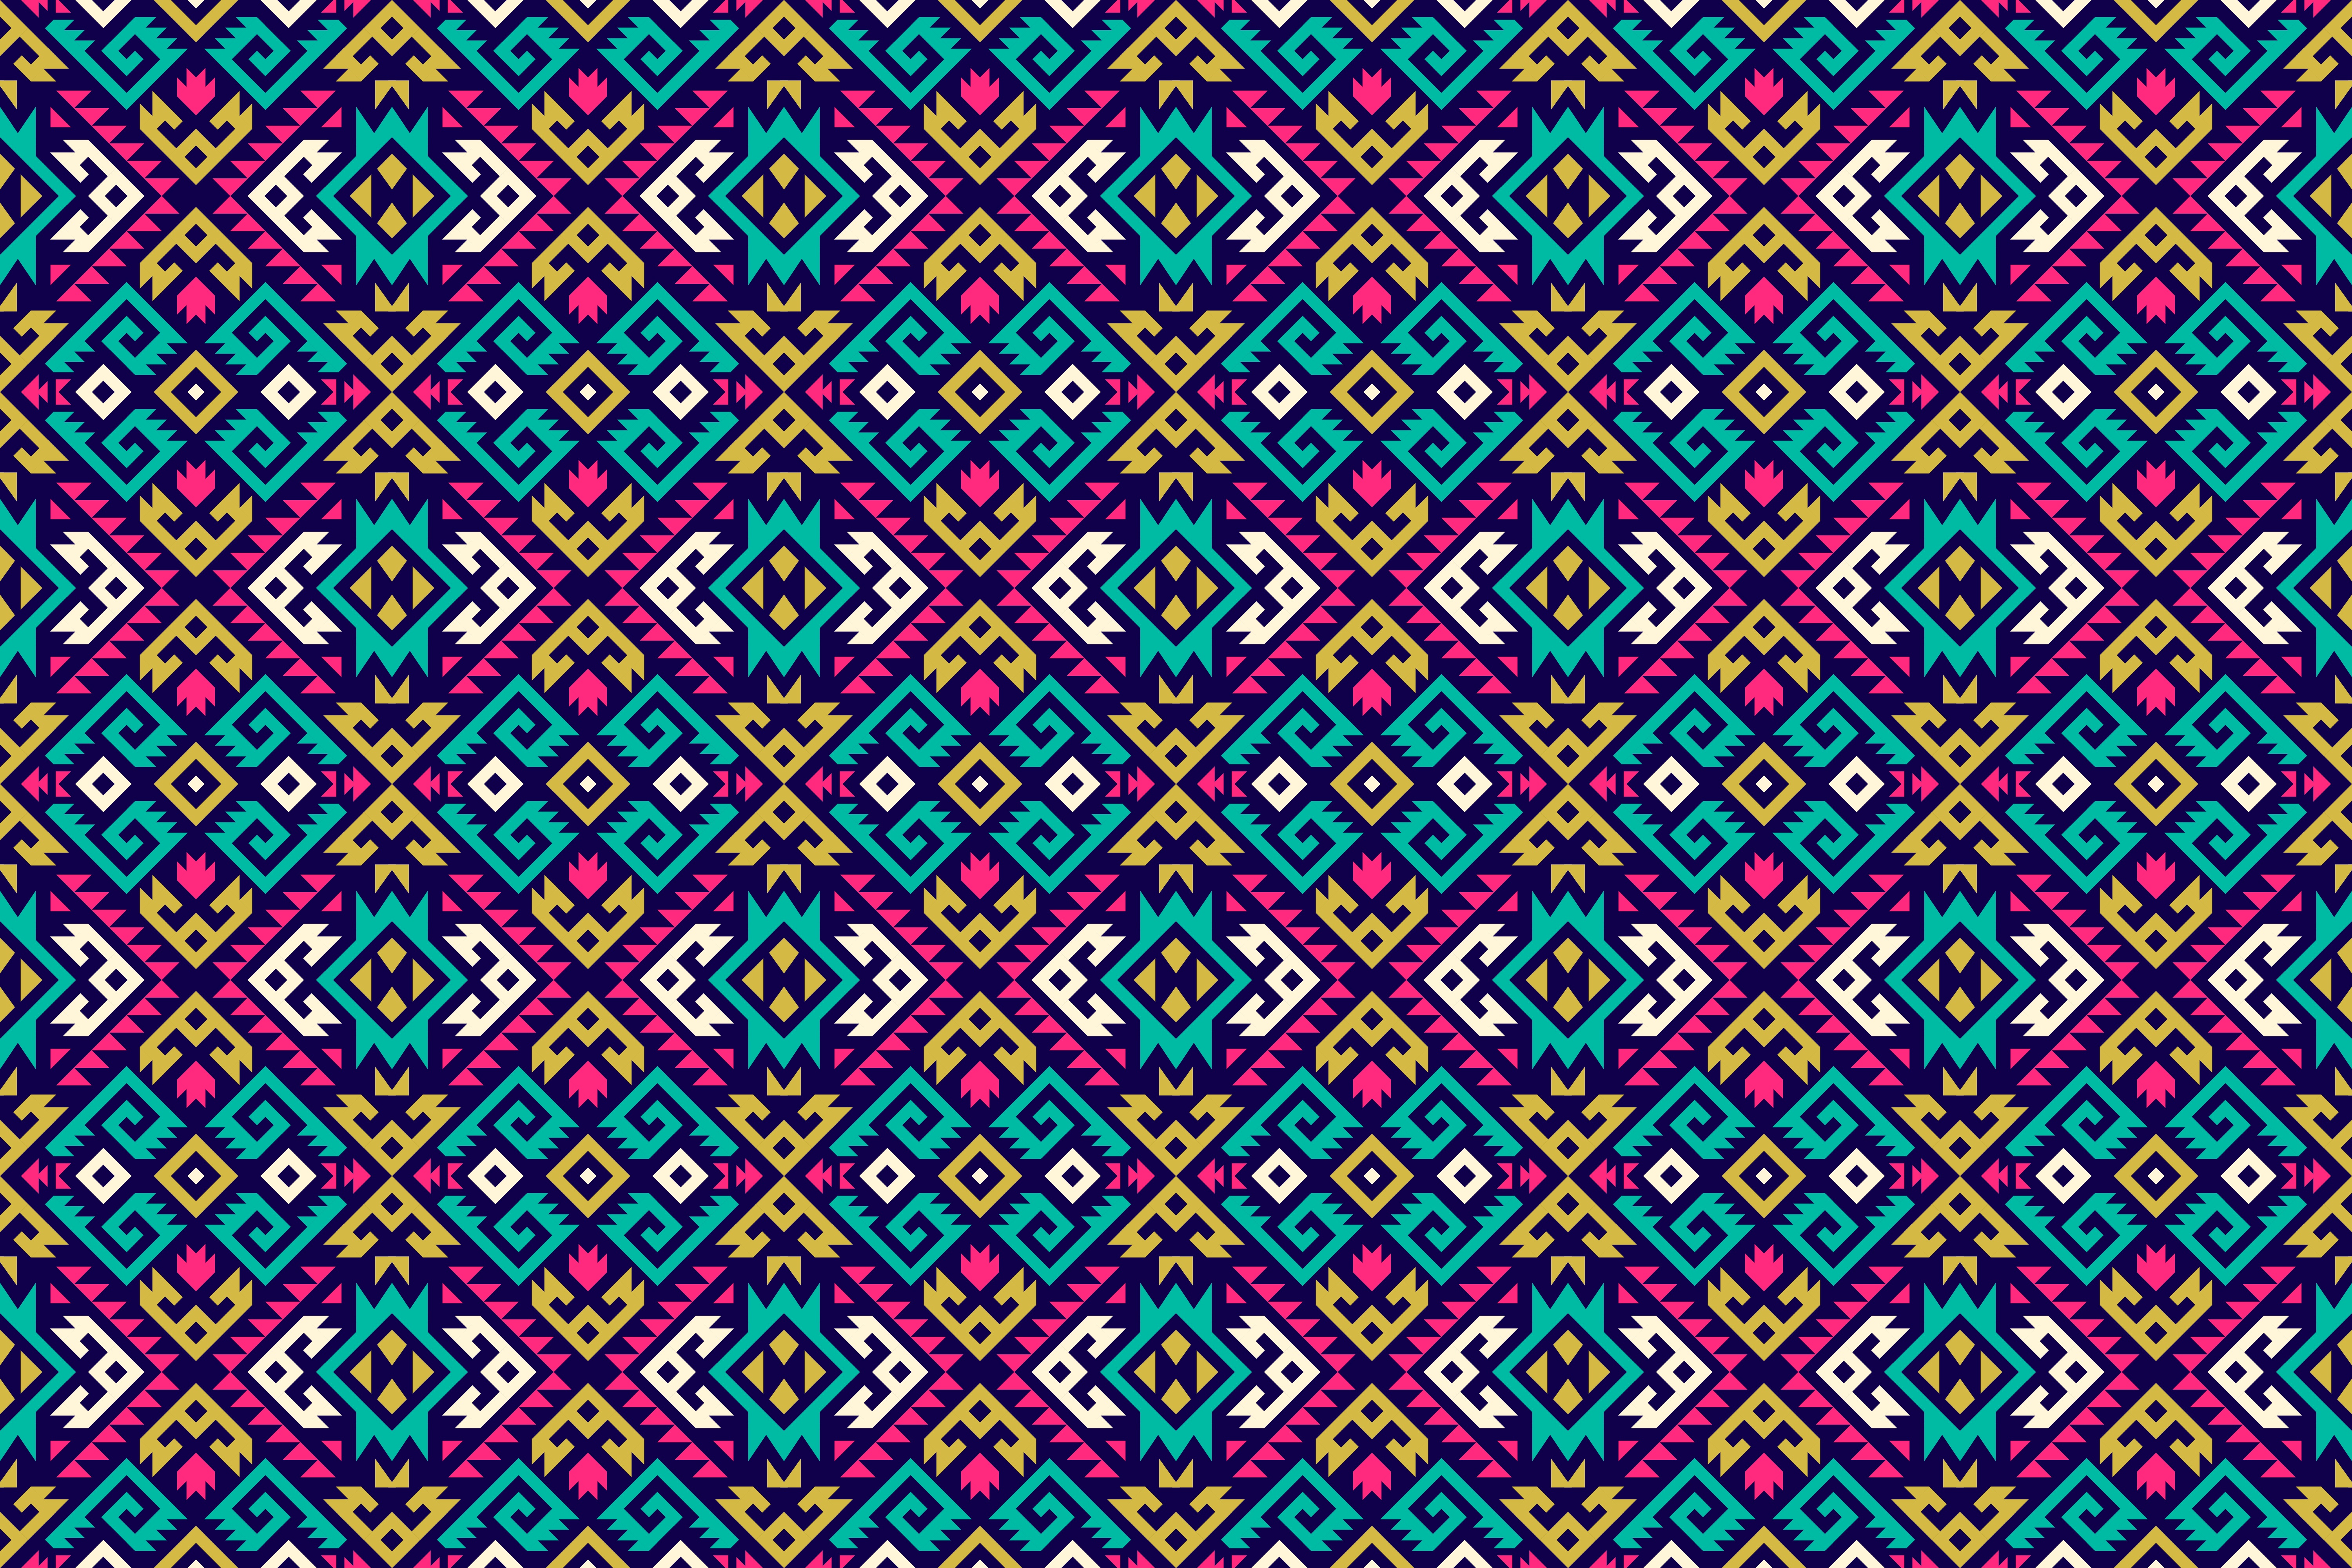 General 6000x4000 pattern abstract colorful mosaic tribal  vector artwork digital art